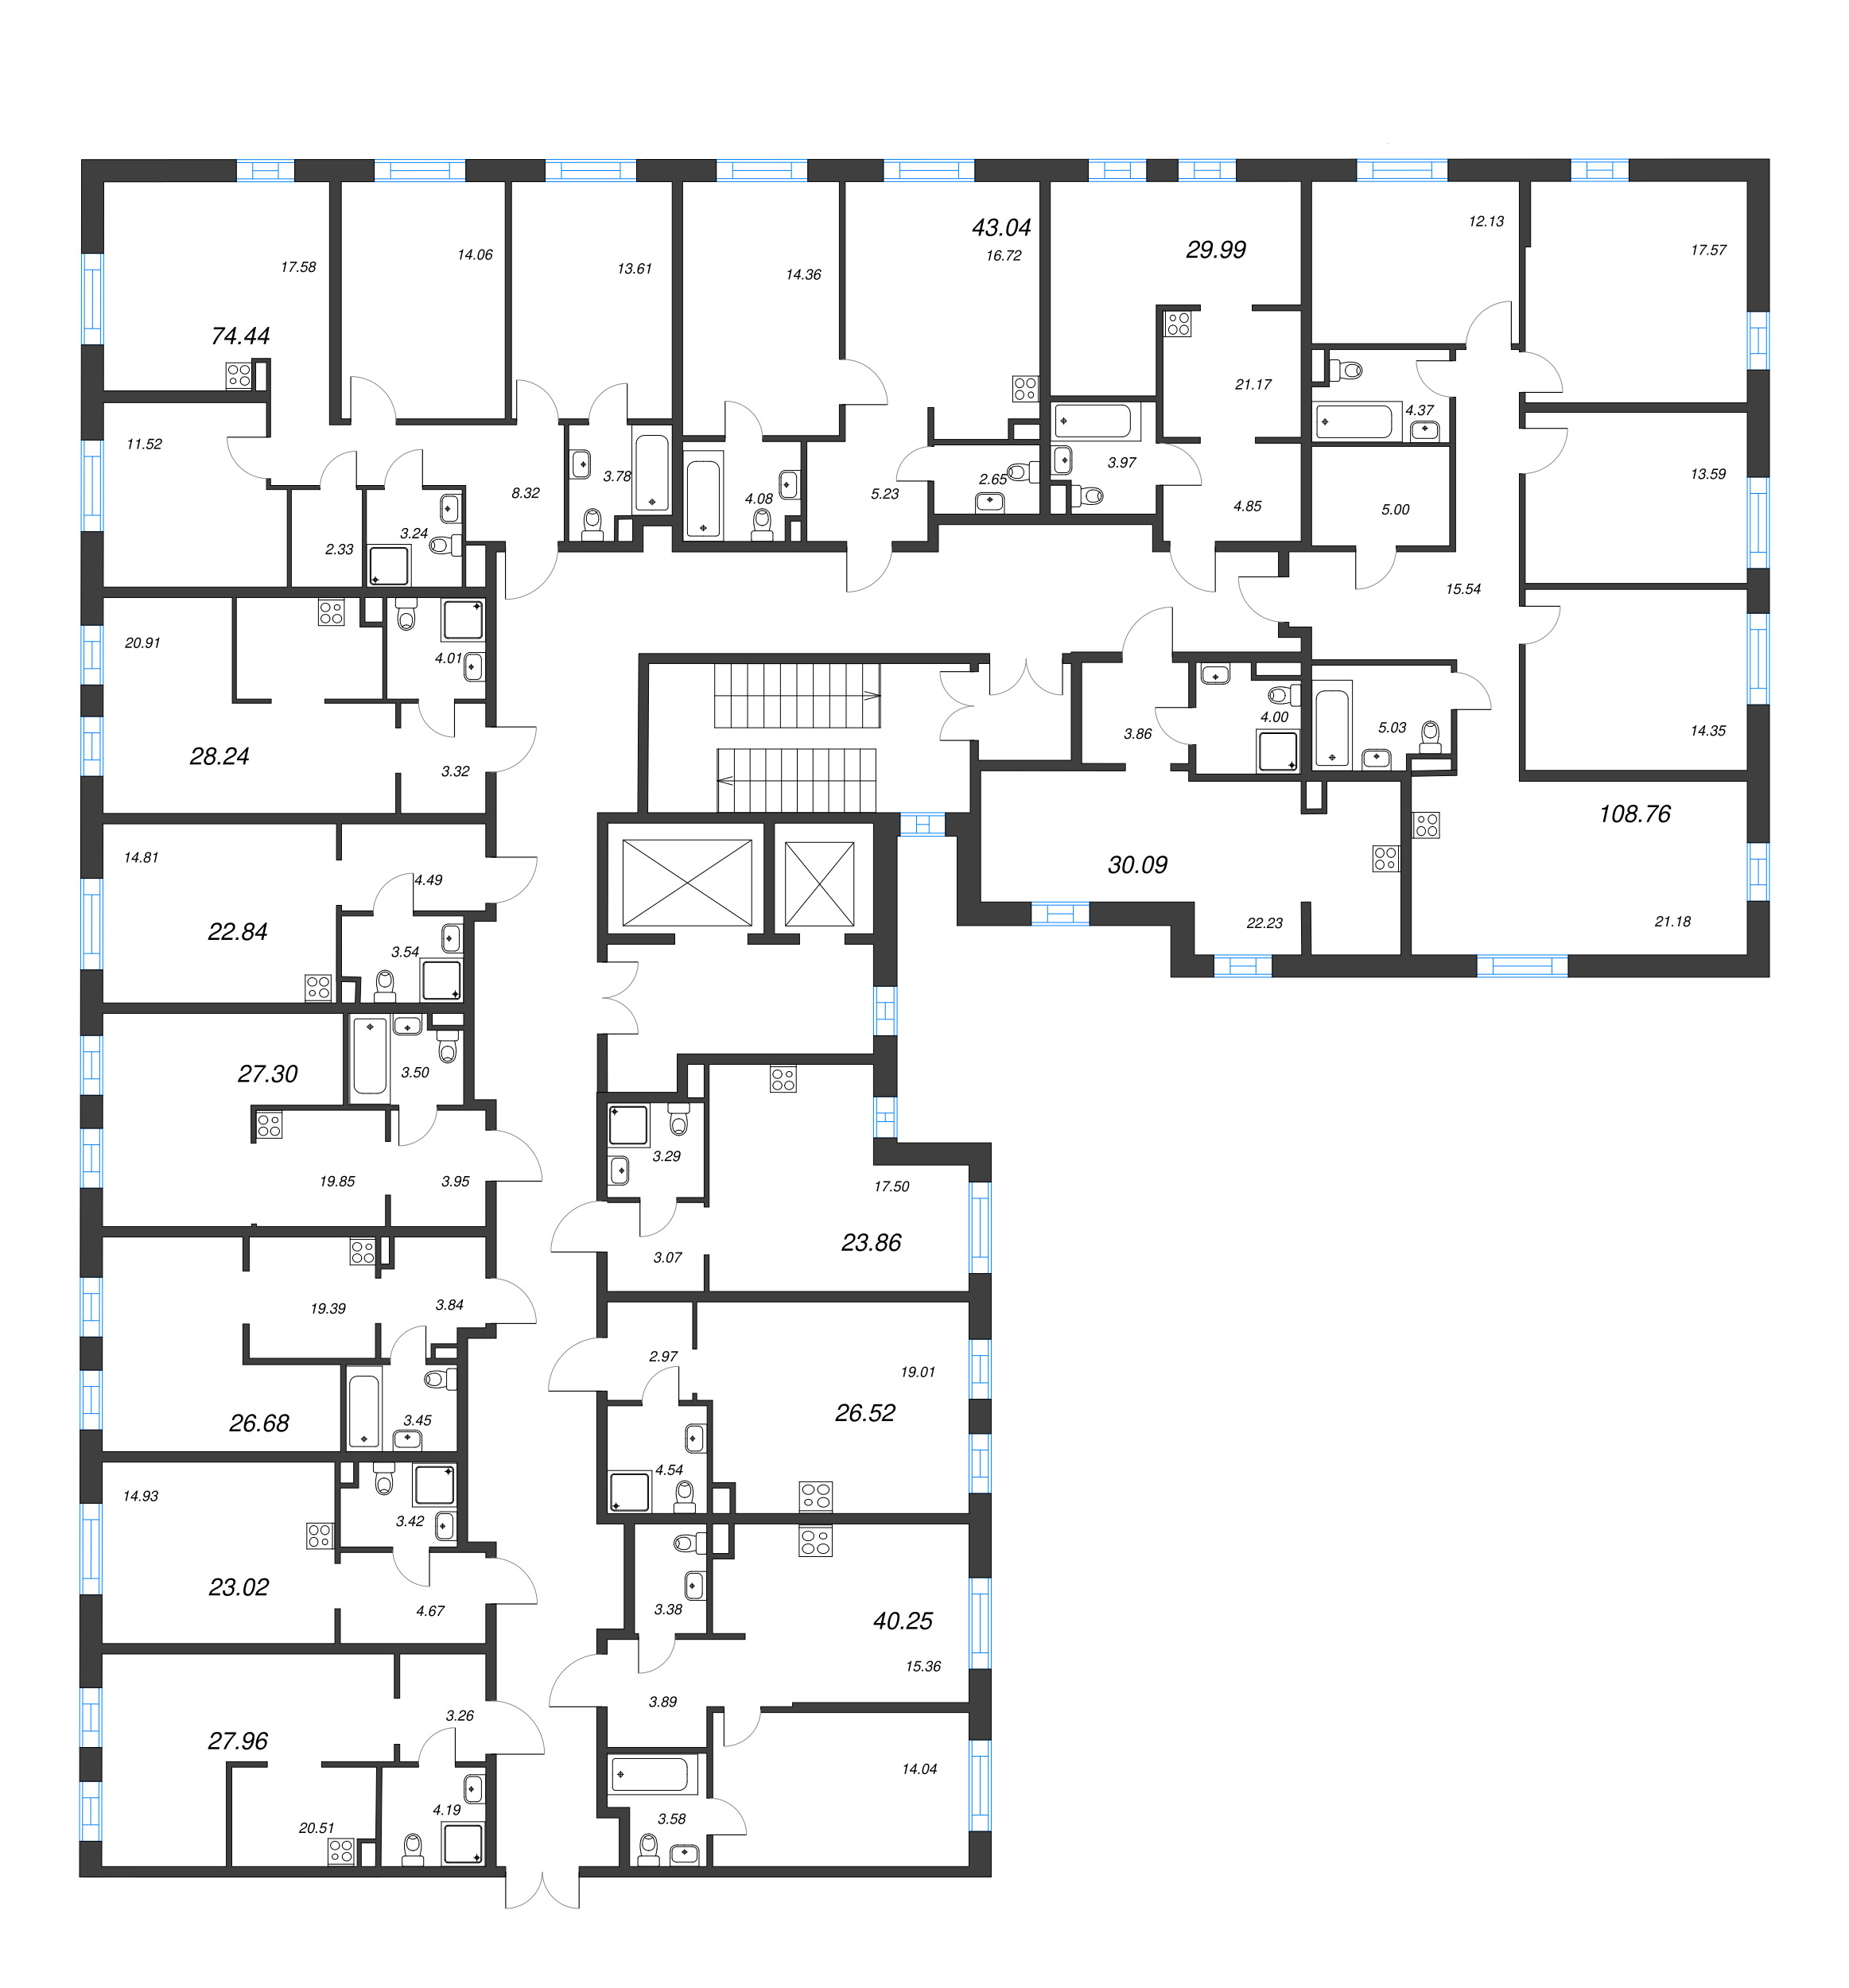 4-комнатная (Евро) квартира, 74.44 м² - планировка этажа